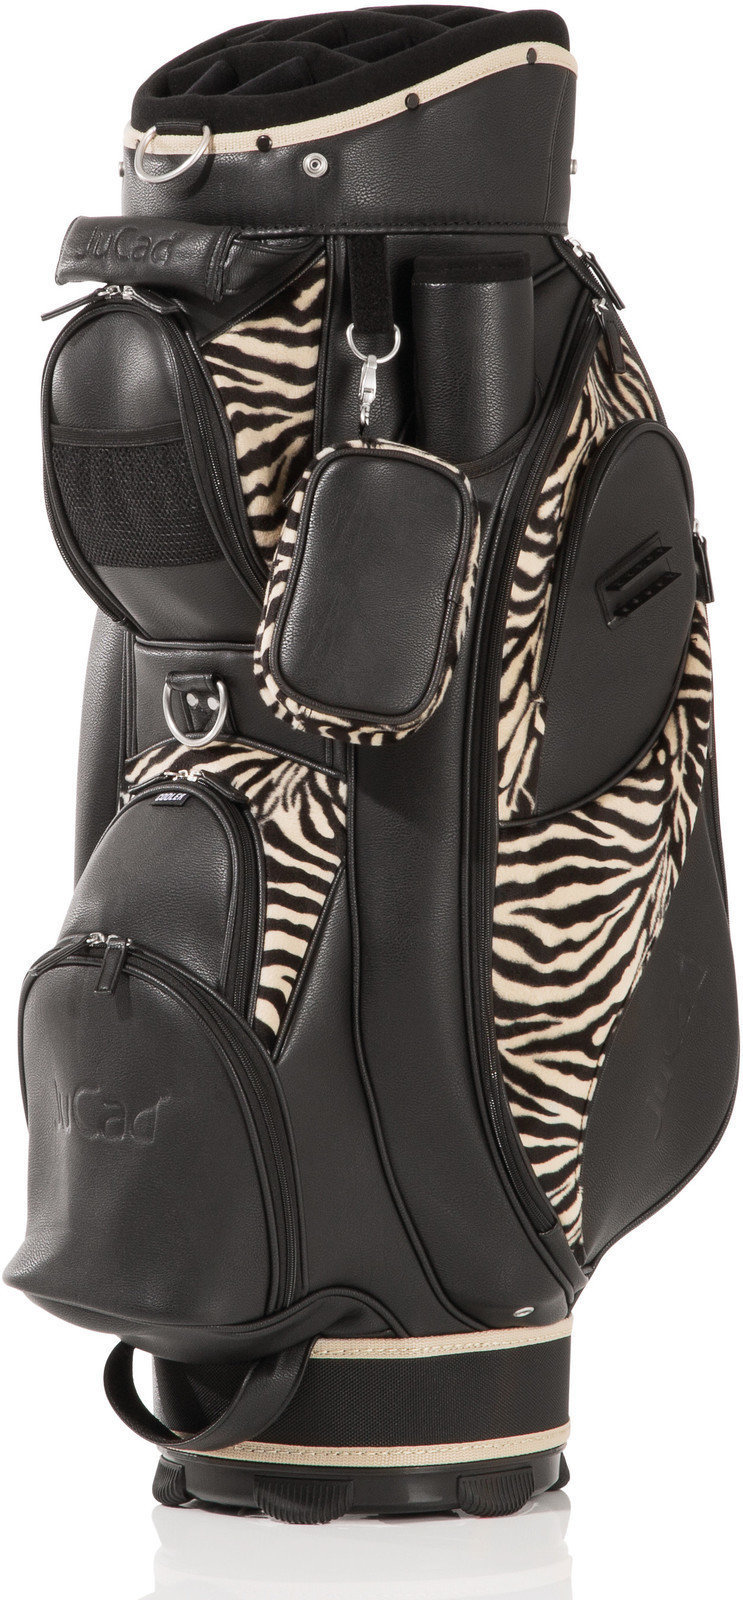 Saco de golfe Jucad Style Black/Zebra Cart Bag